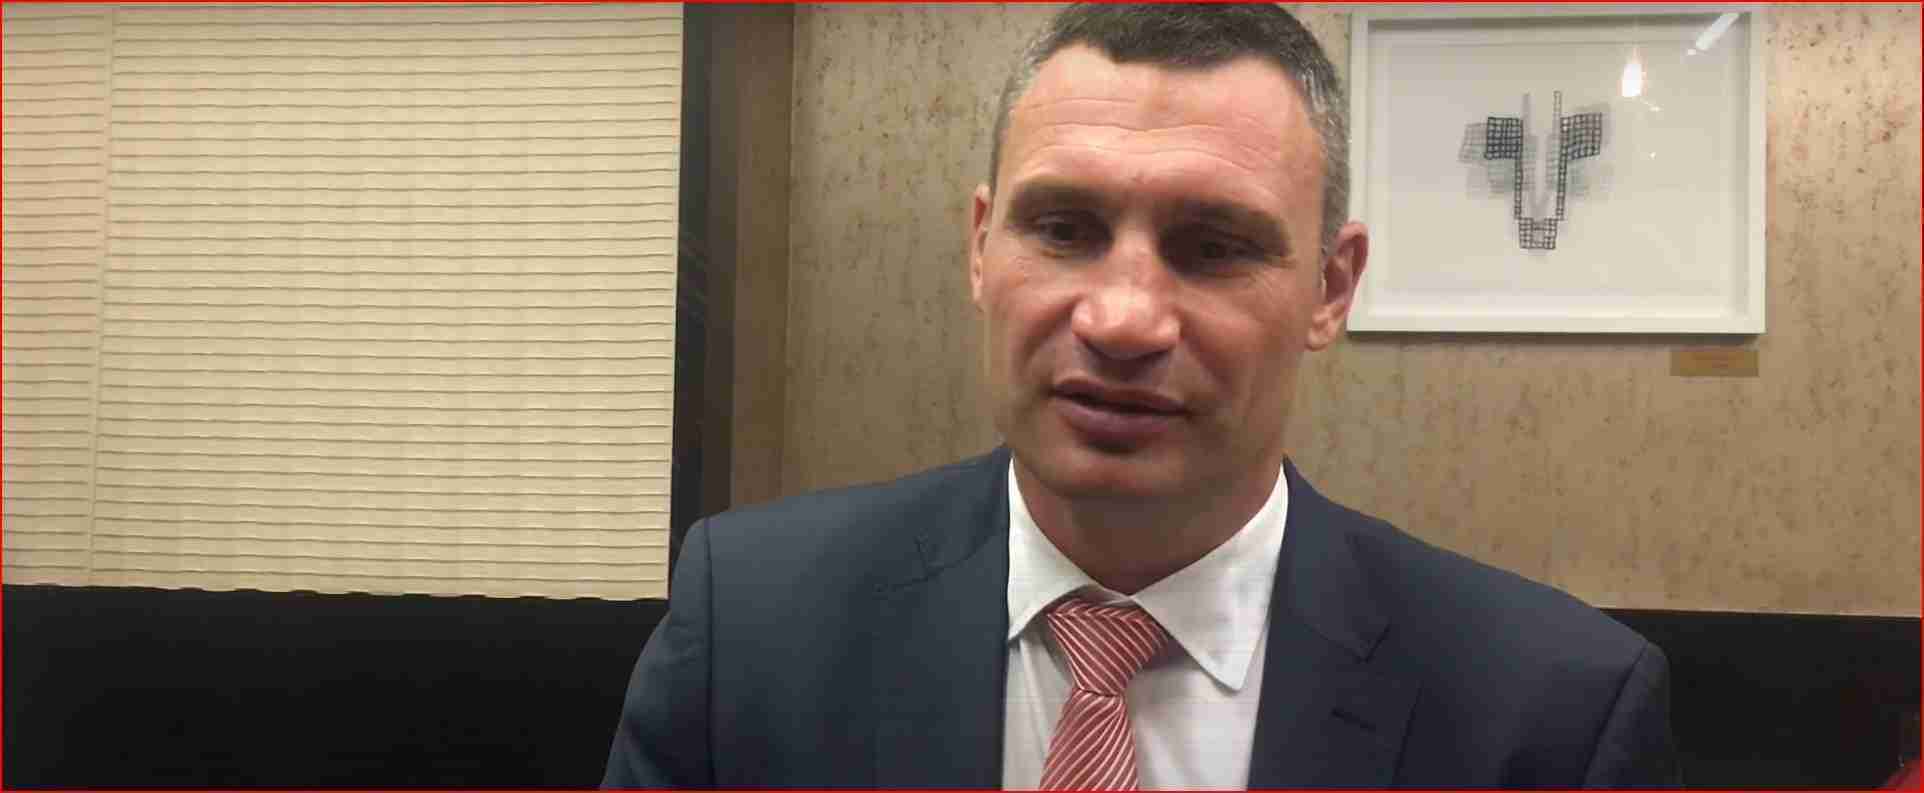 Klitschko Happy To Fight On Front Line If War Happens